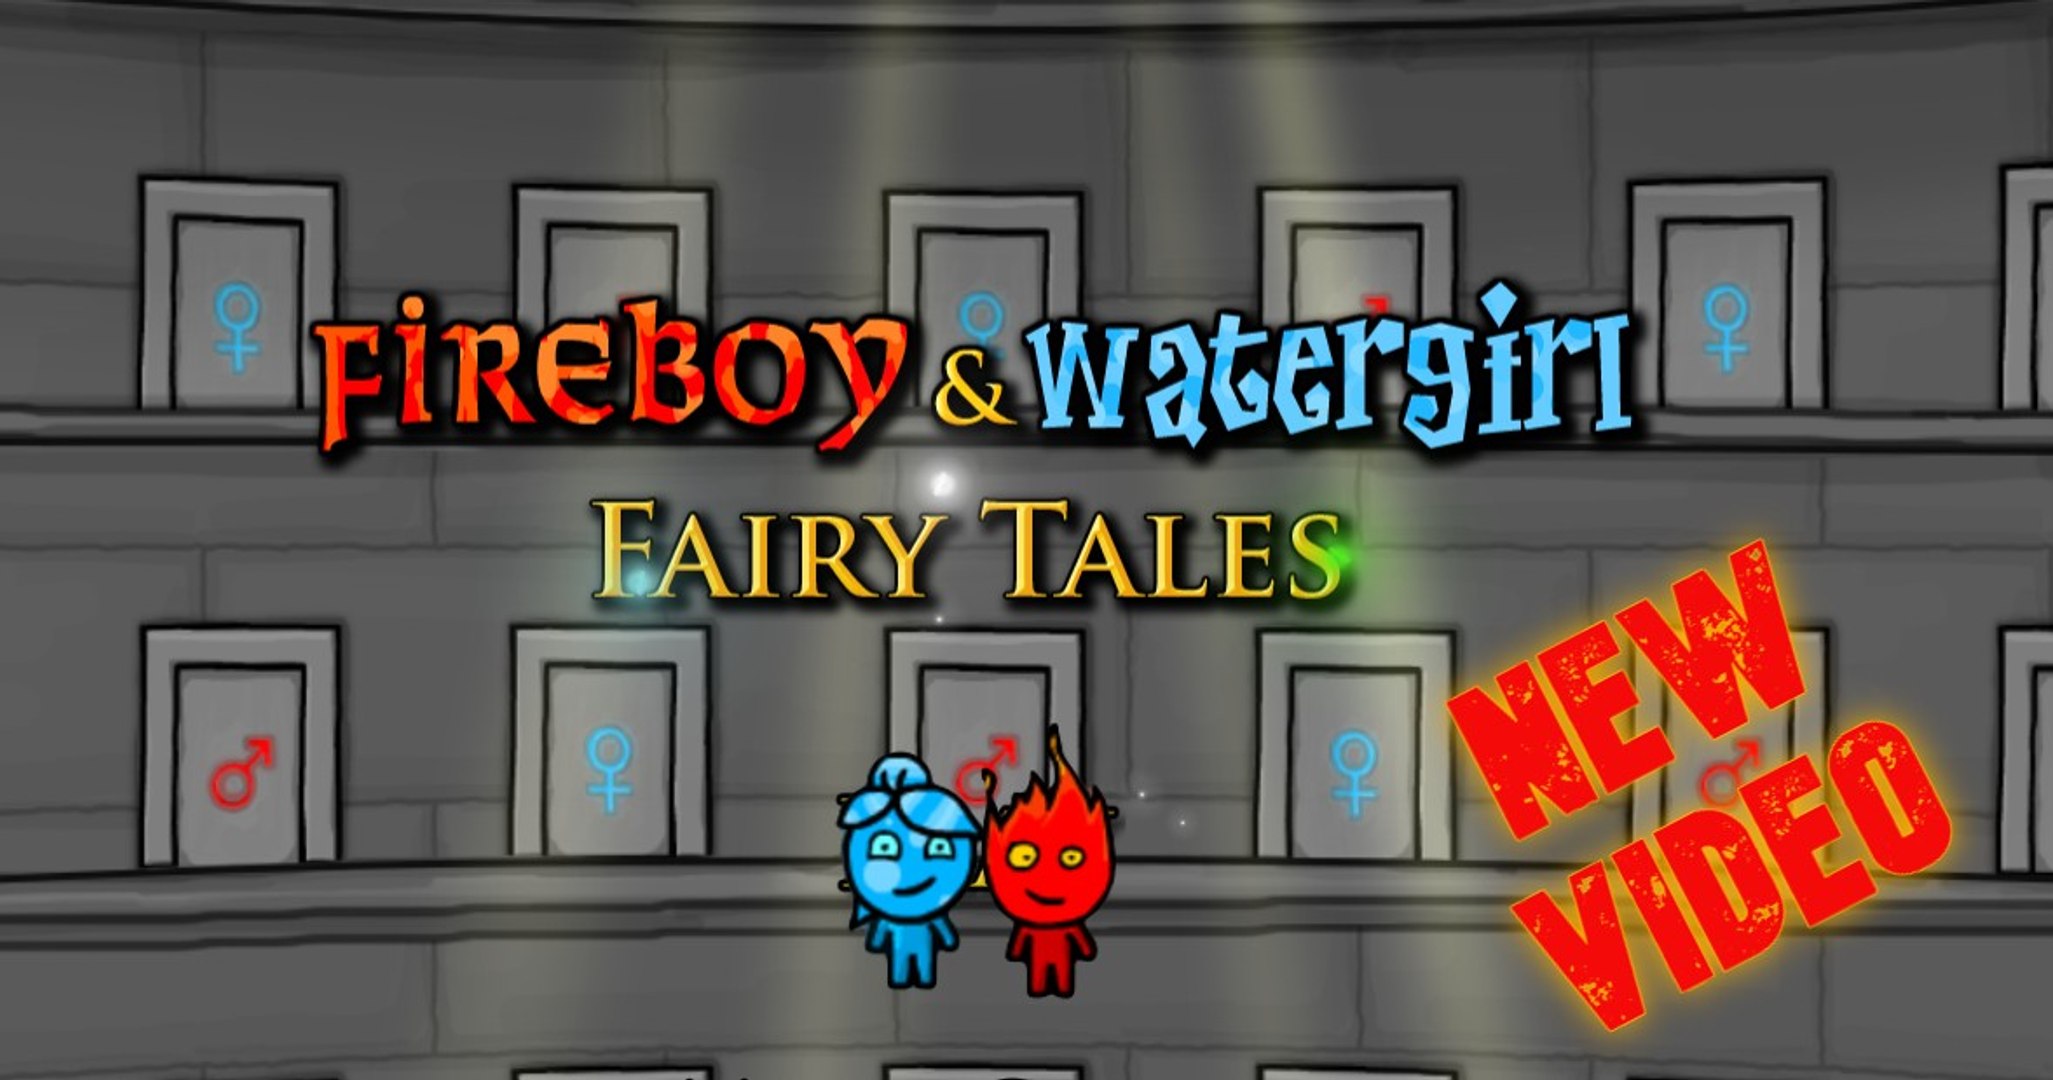 How long is Fireboy & Watergirl: Fairy Tales?